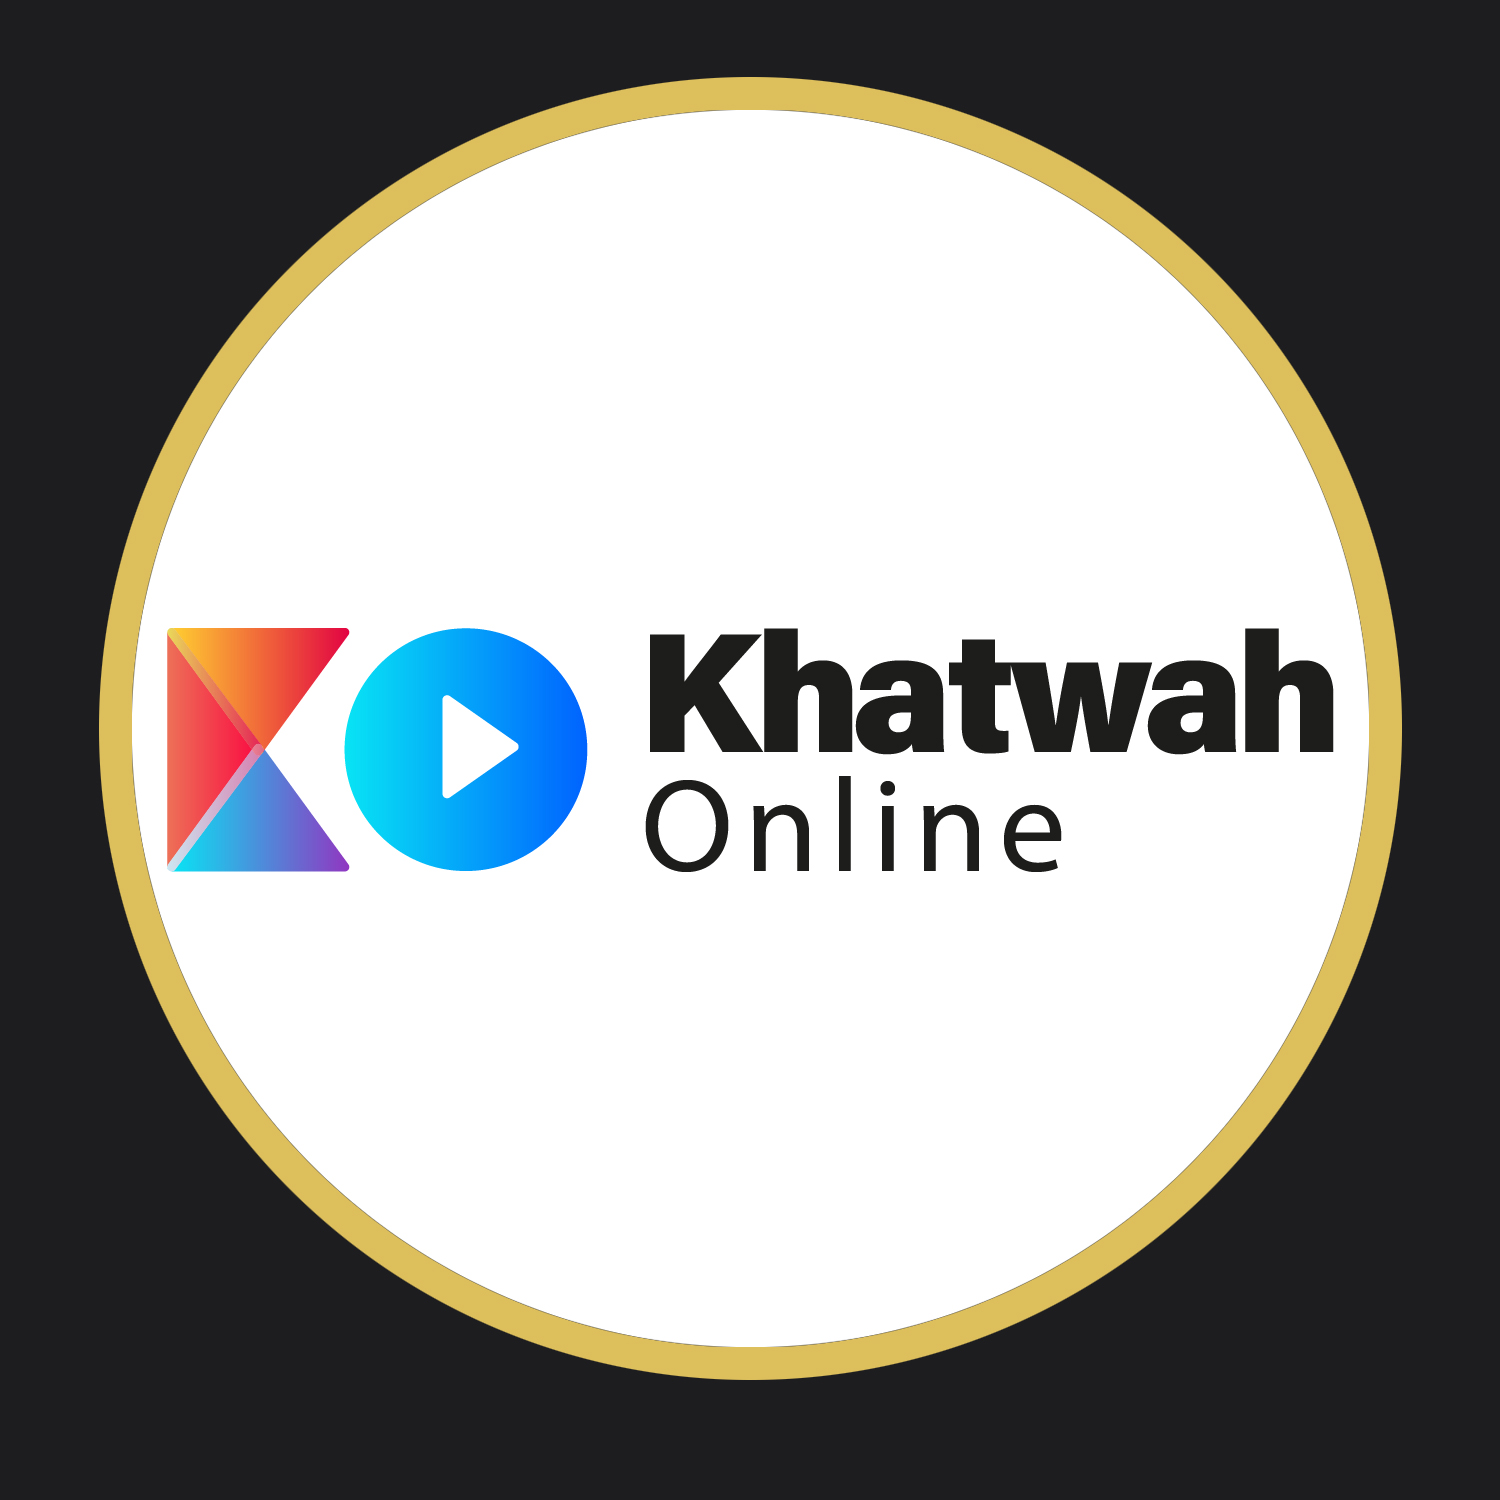 Khatwah Online